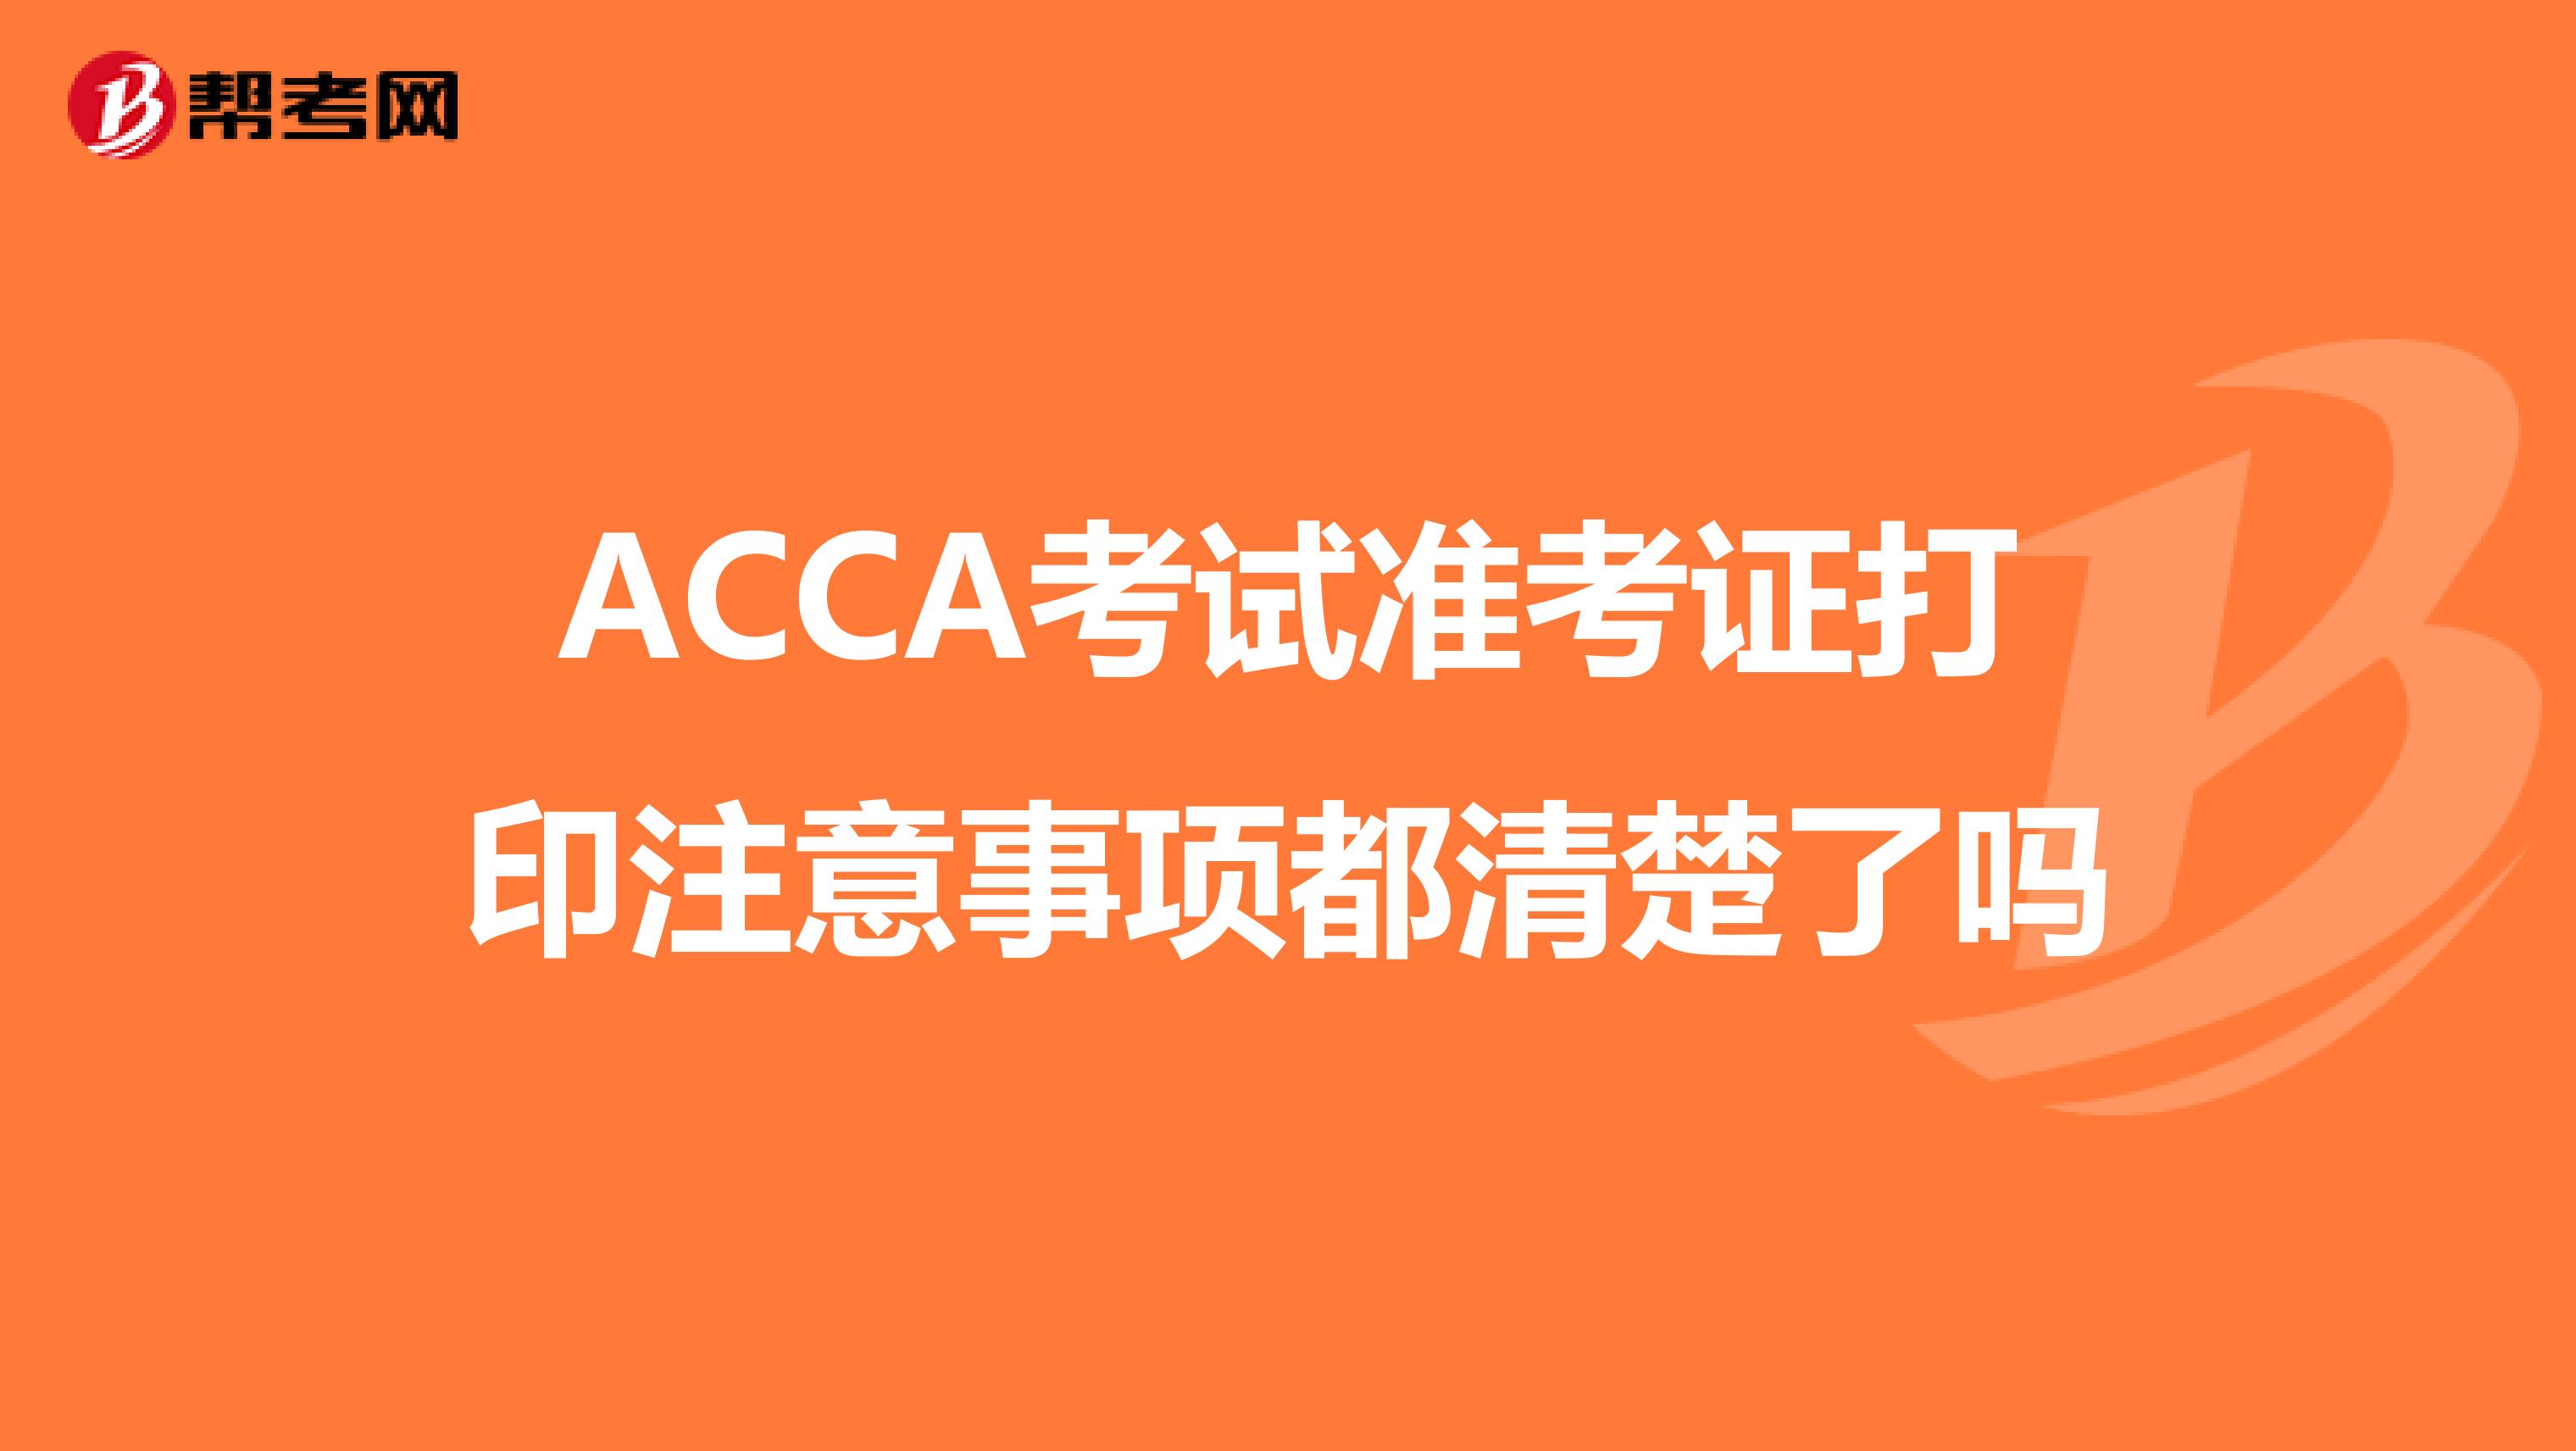 ACCA考试准考证打印注意事项都清楚了吗